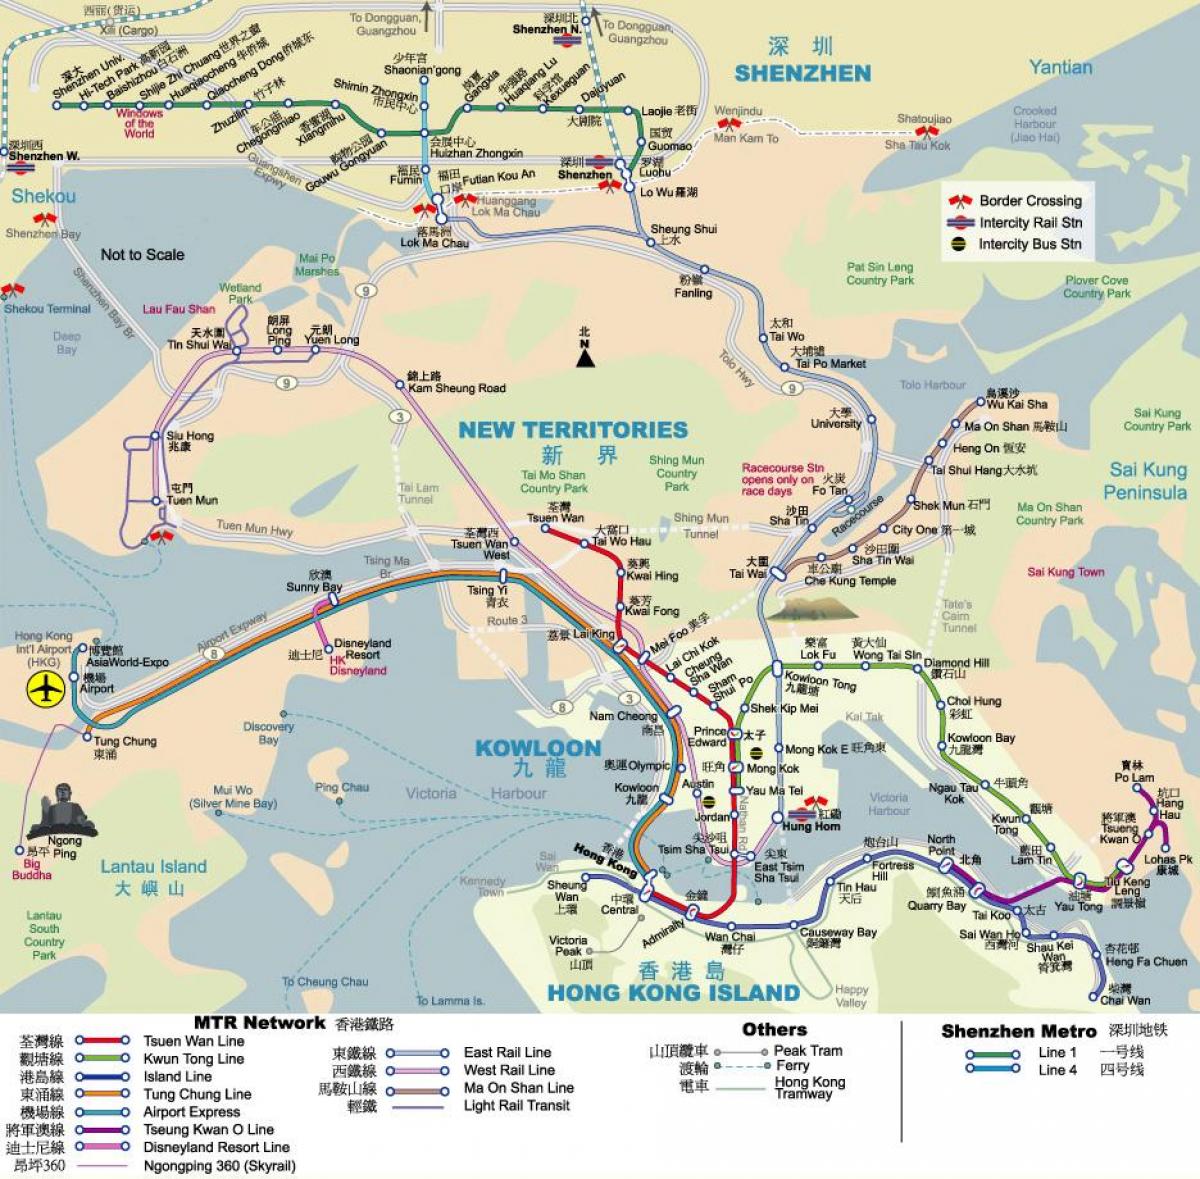 MTR harta e Hong Kong